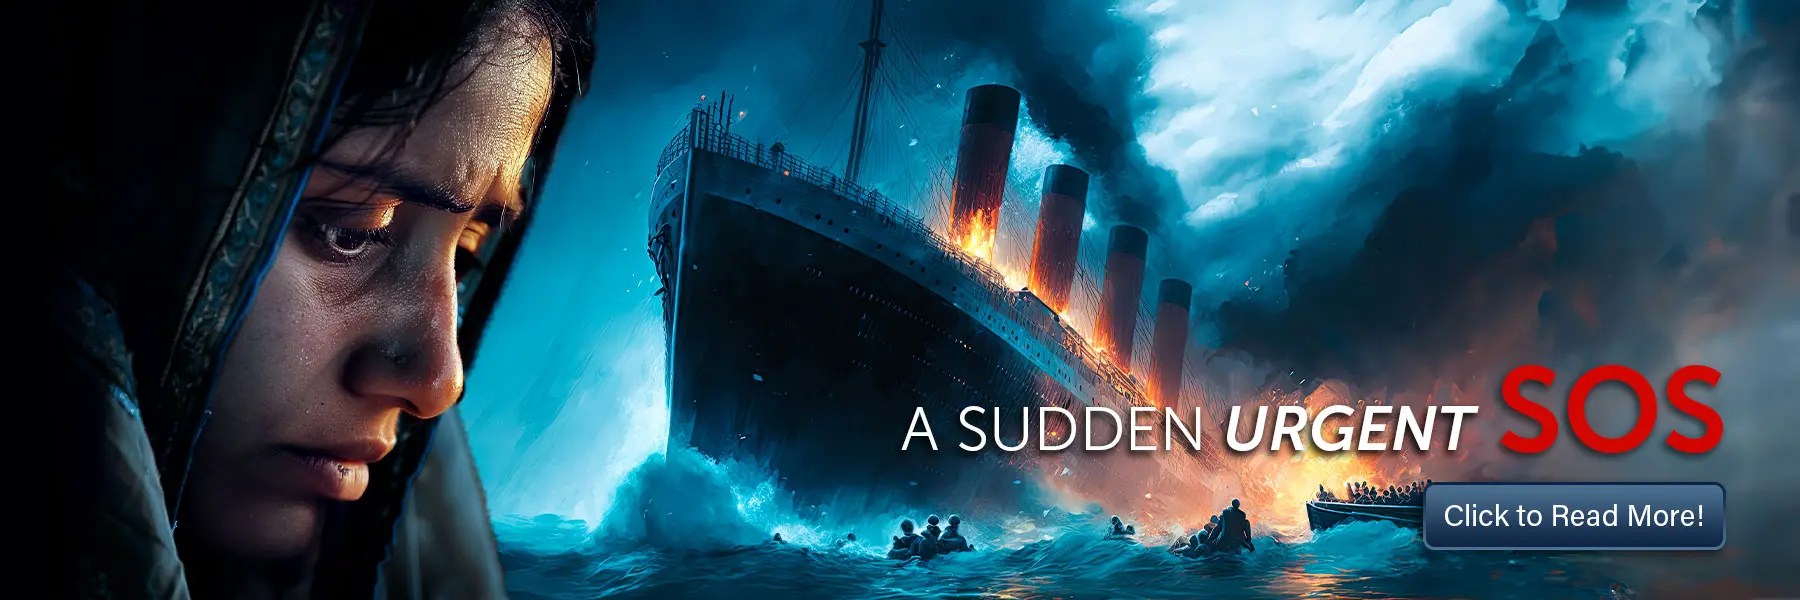 Sinking ship that looks like Titanic